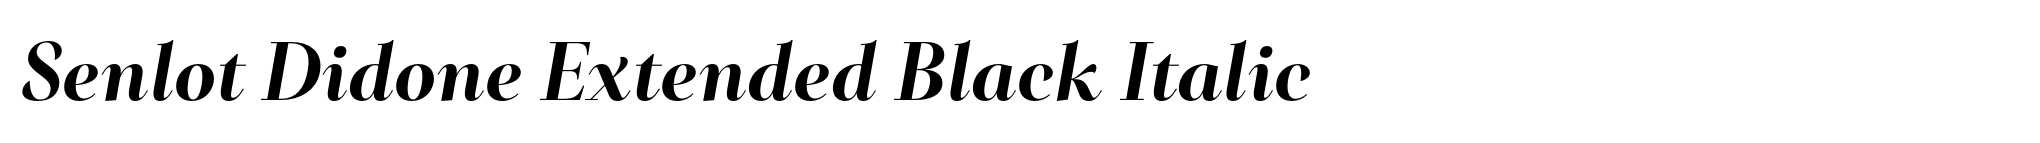 Senlot Didone Extended Black Italic image